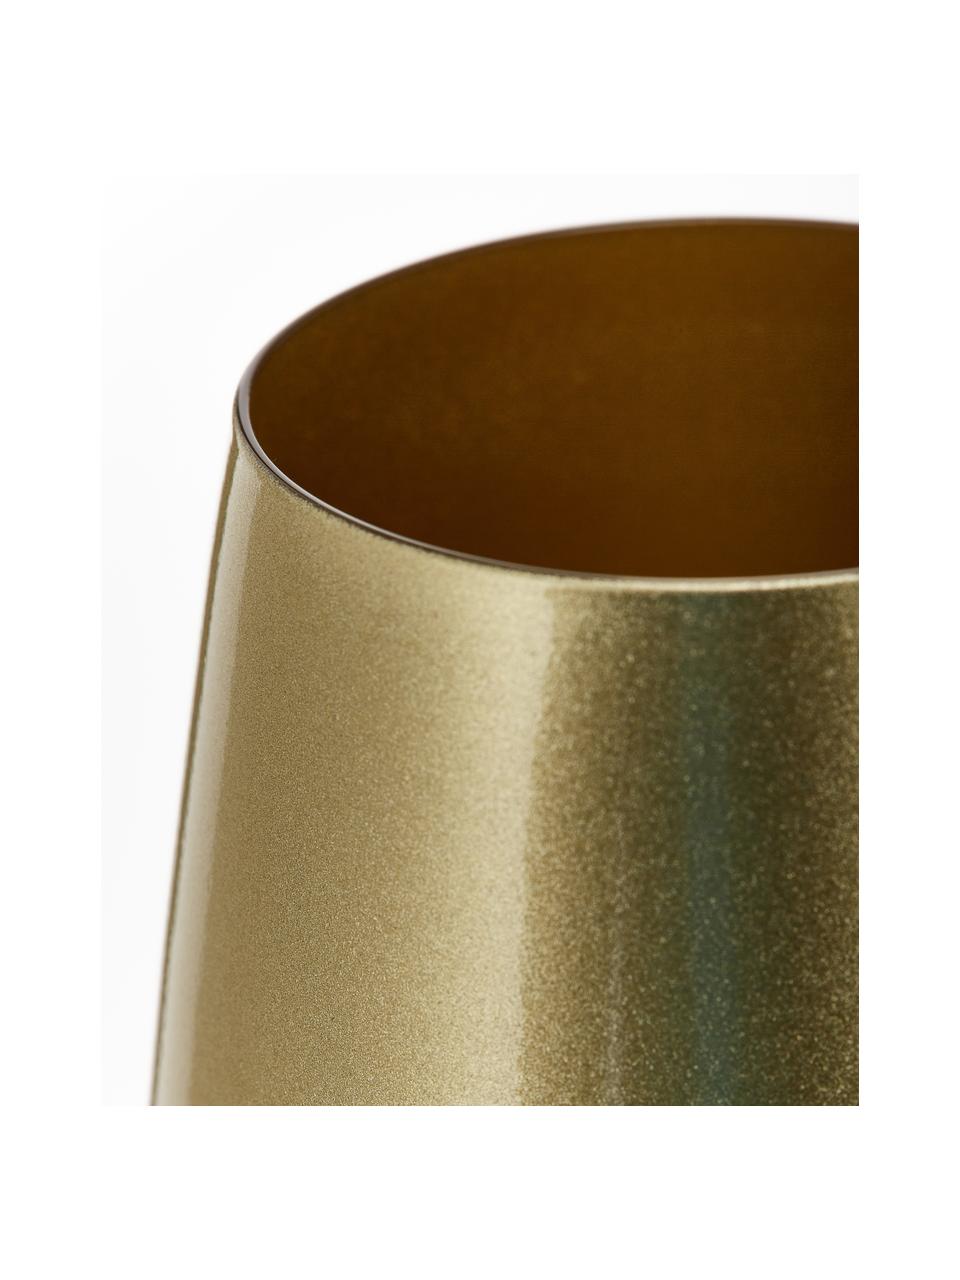 Kristall-Longdrinkgläser Elements in Gold, 6 Stück, Kristallglas, beschichtet, Goldfarben, Ø 9 x H 12 cm